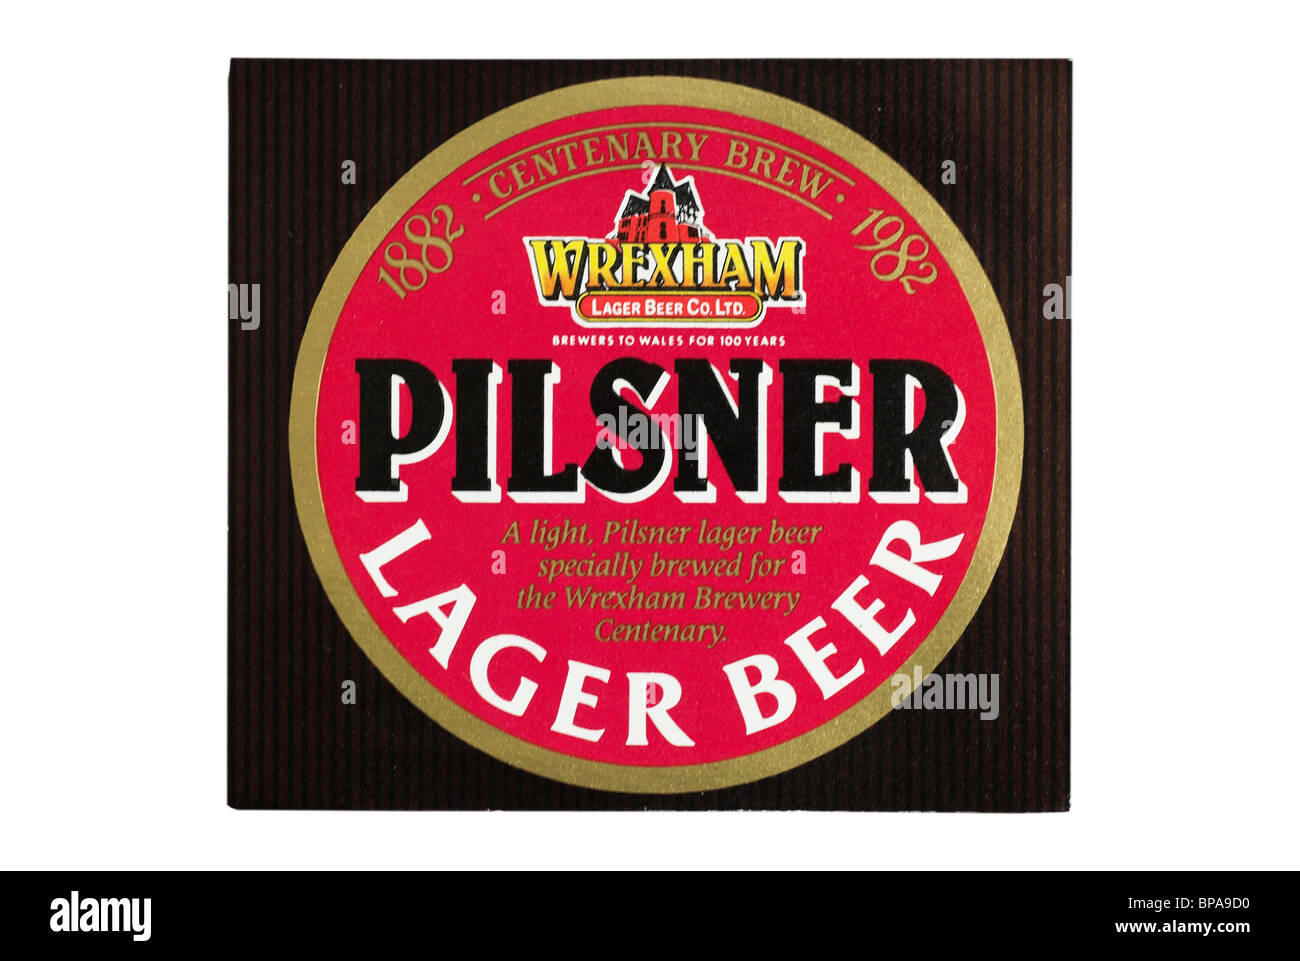 Wrexham Brewery Pilsner Lager Beer bottle label -1982. Stock Photo